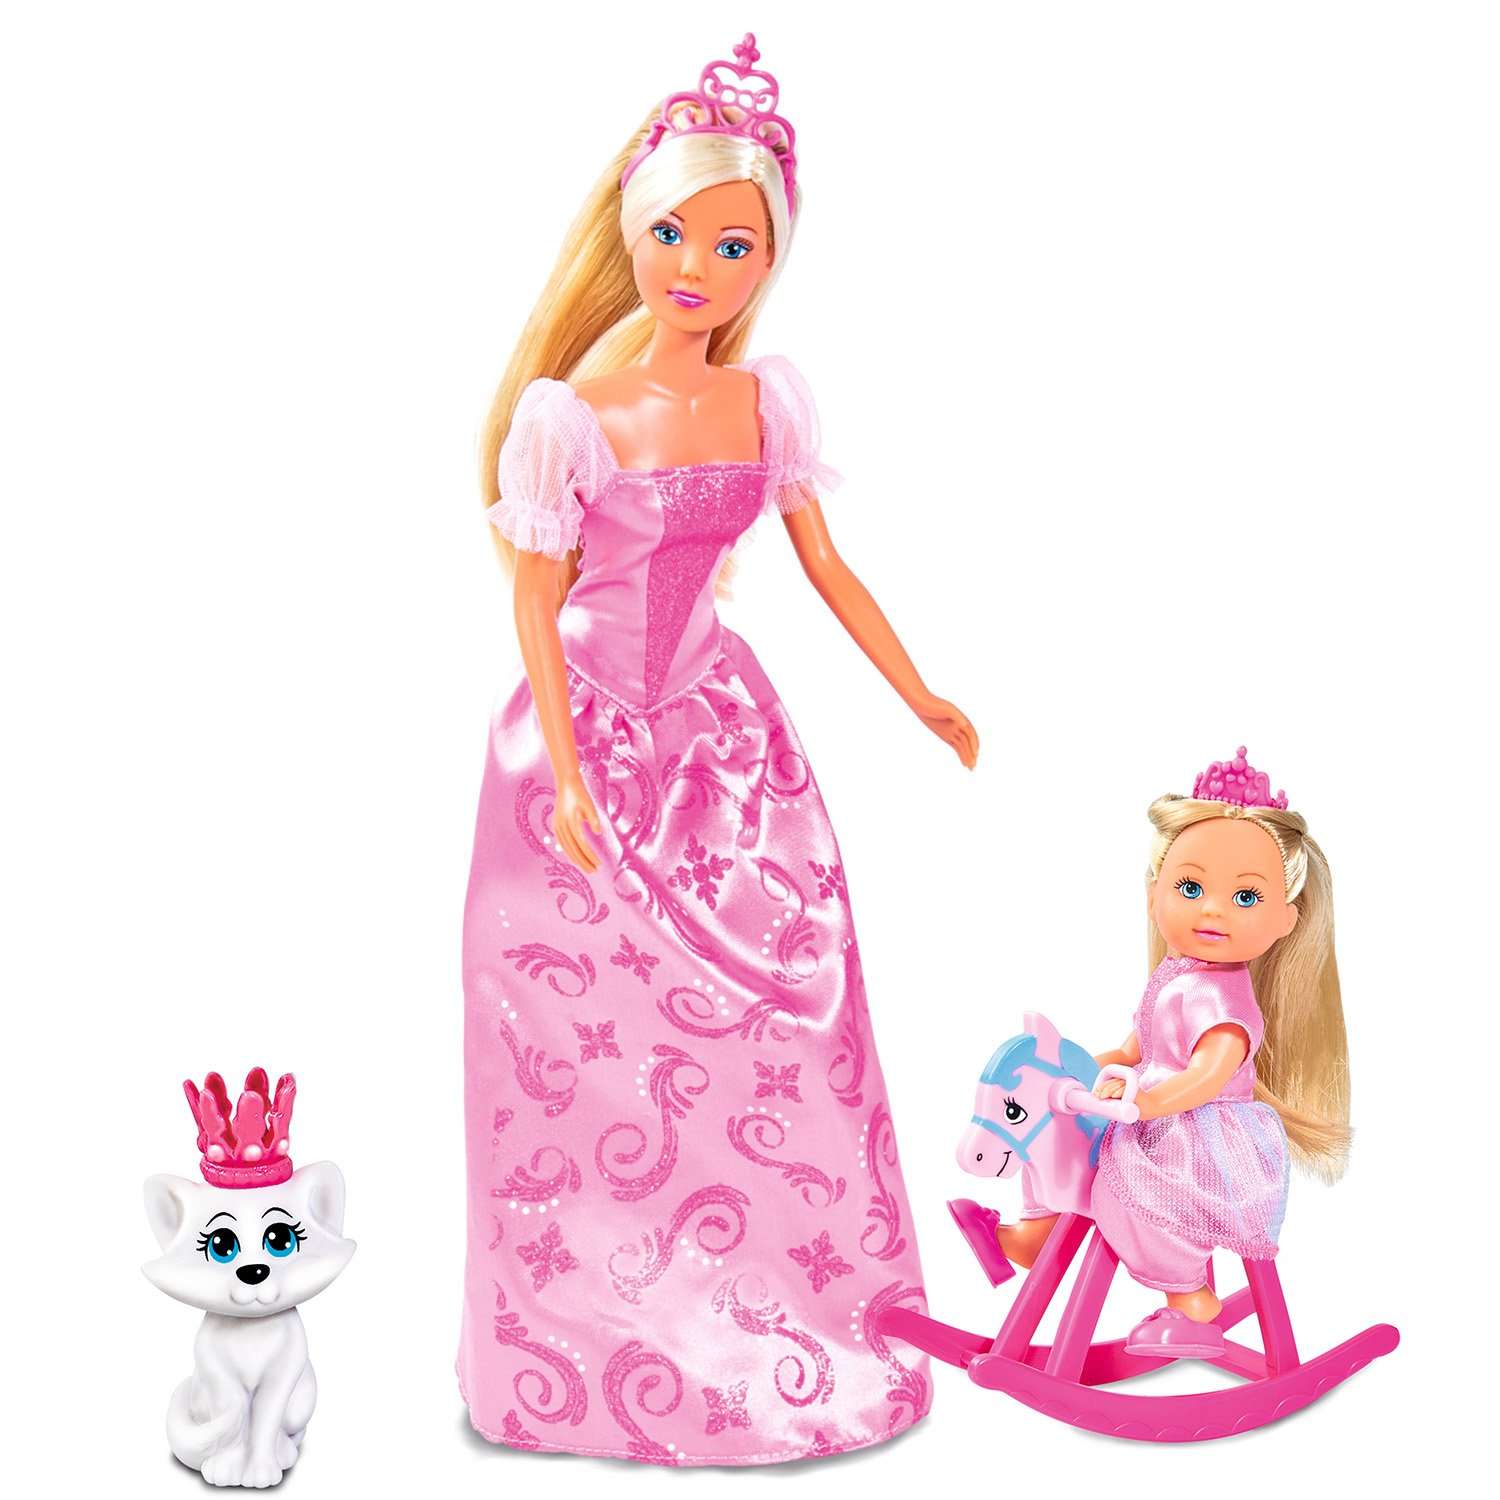 Набор кукол Steffi love Принцессы со зверушками 5733223 #5733223 - фото 1